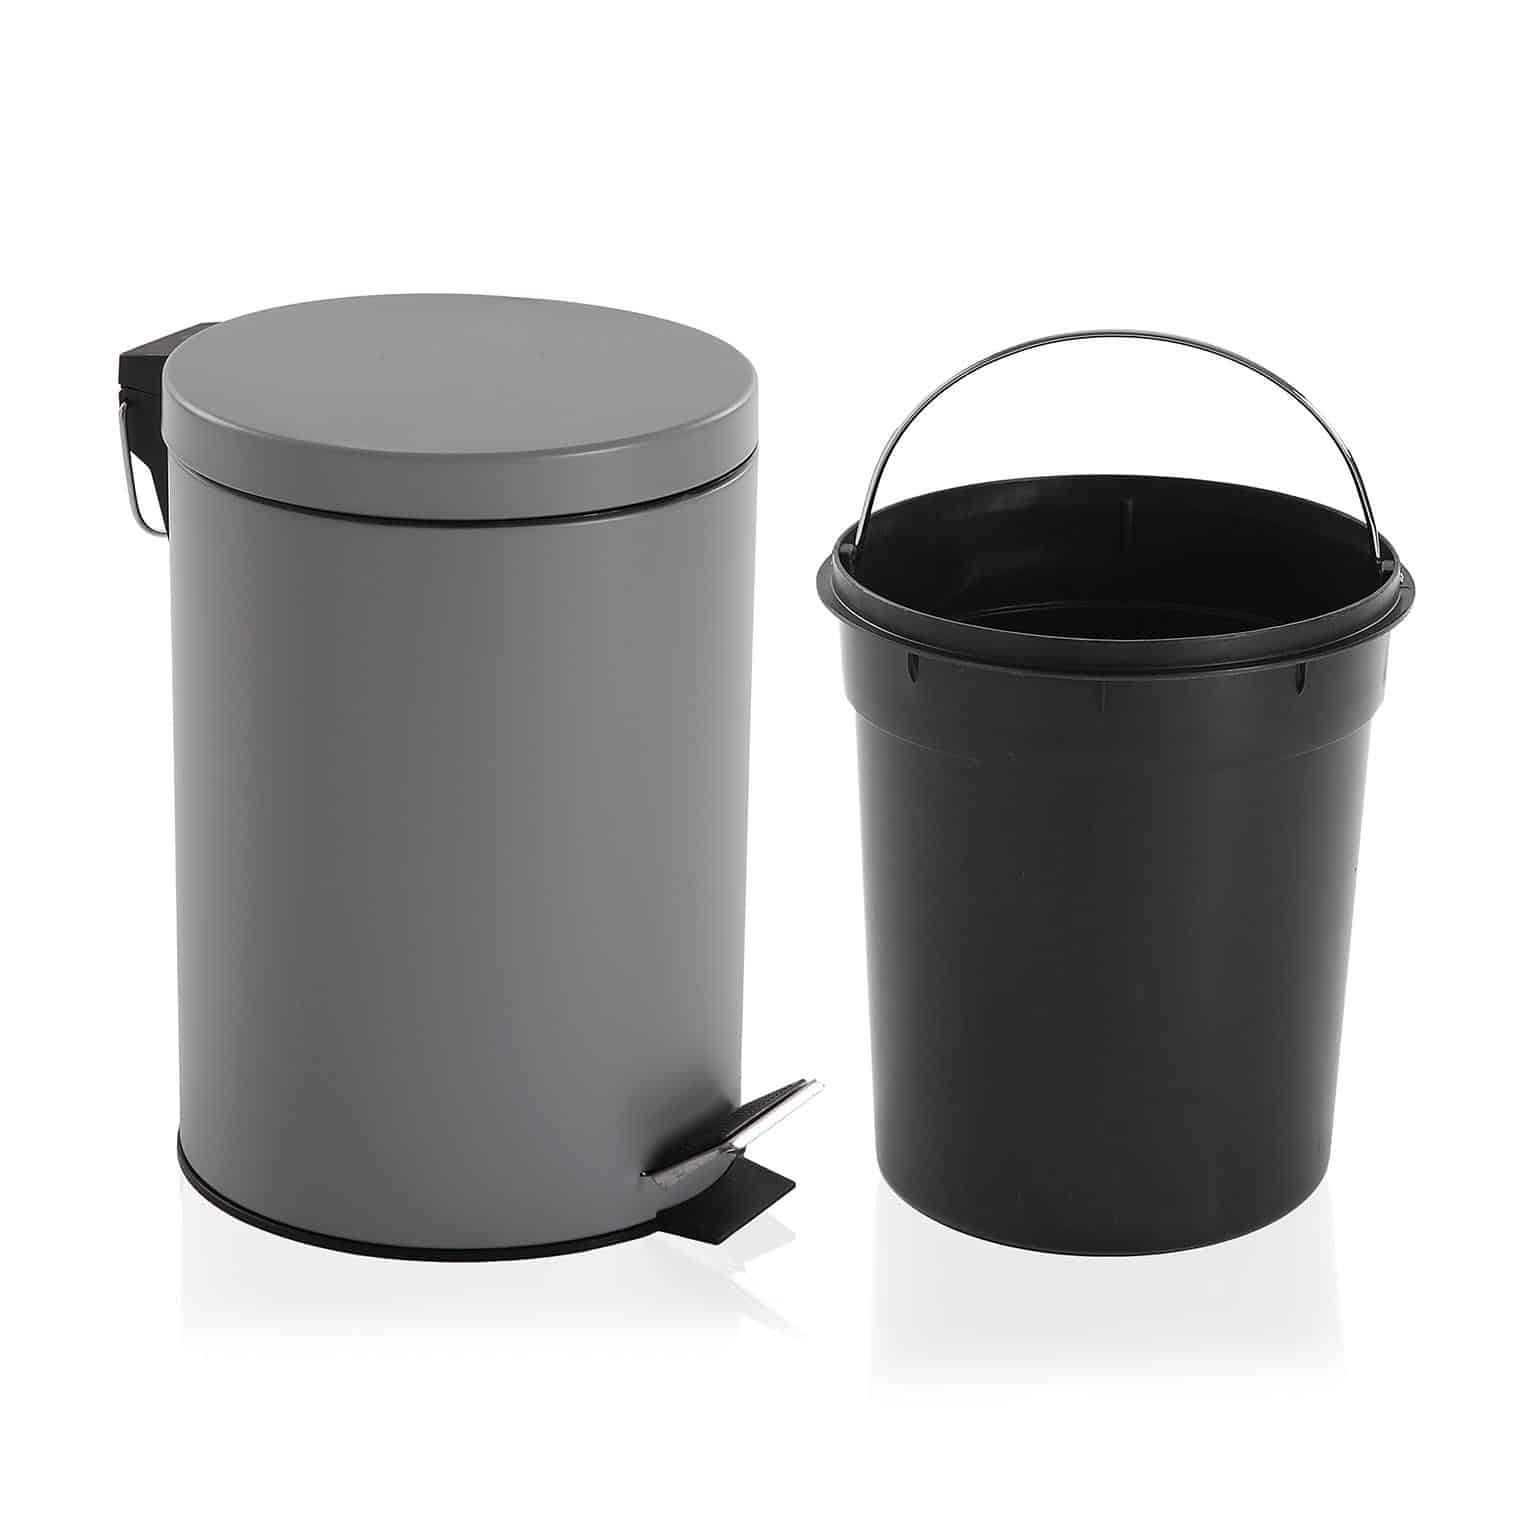 Cubo de basura modular 25 litros (Gris) - Respira de compres al Ripollès